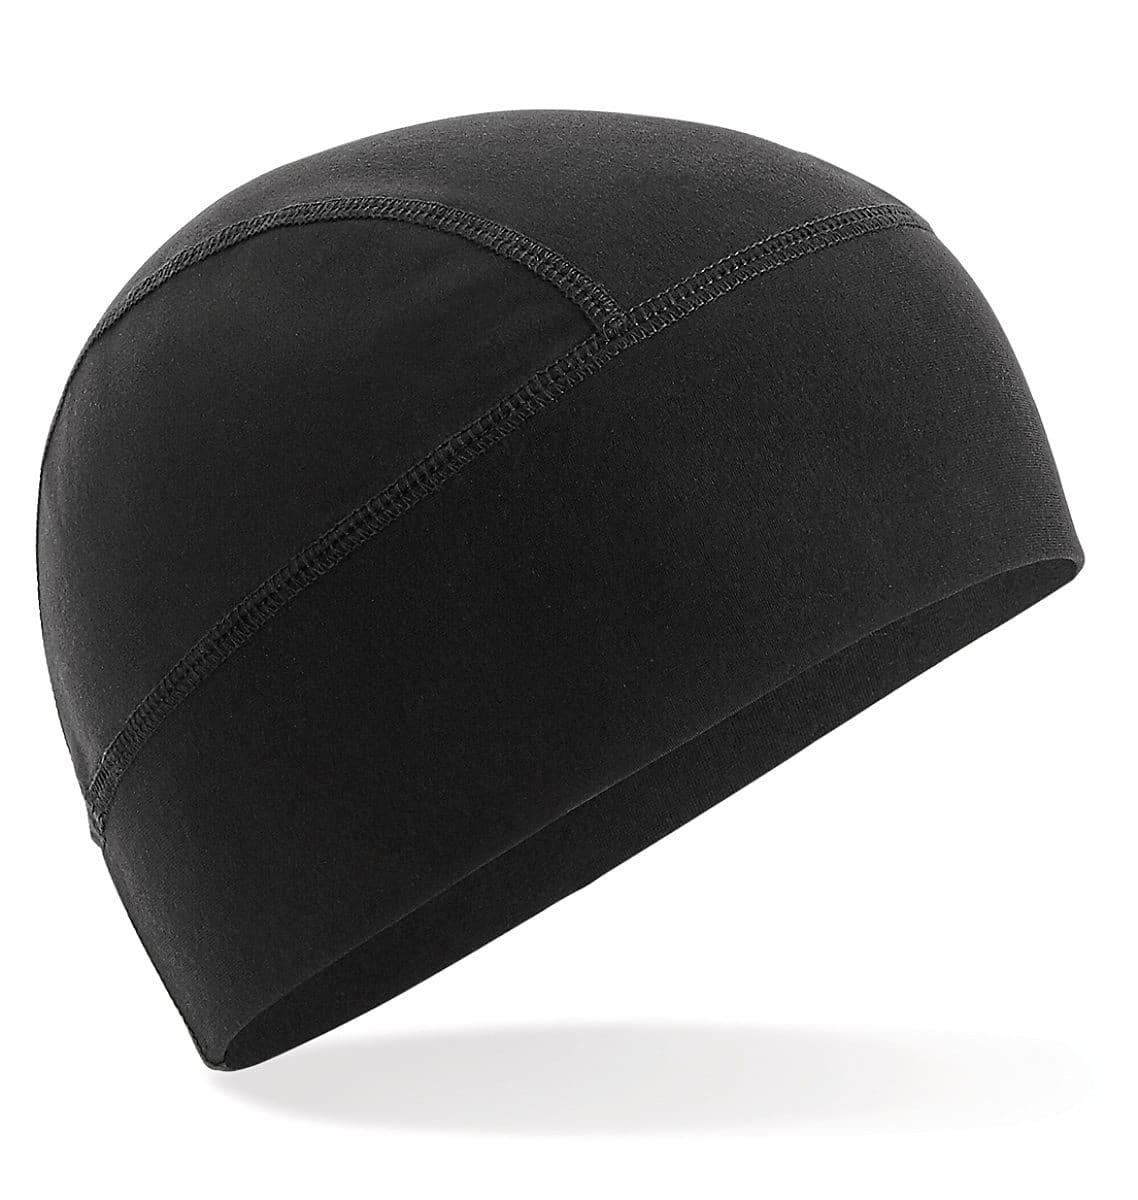 Beechfield Softshell Sports Tech Beanie Hat in Black (Product Code: B315)